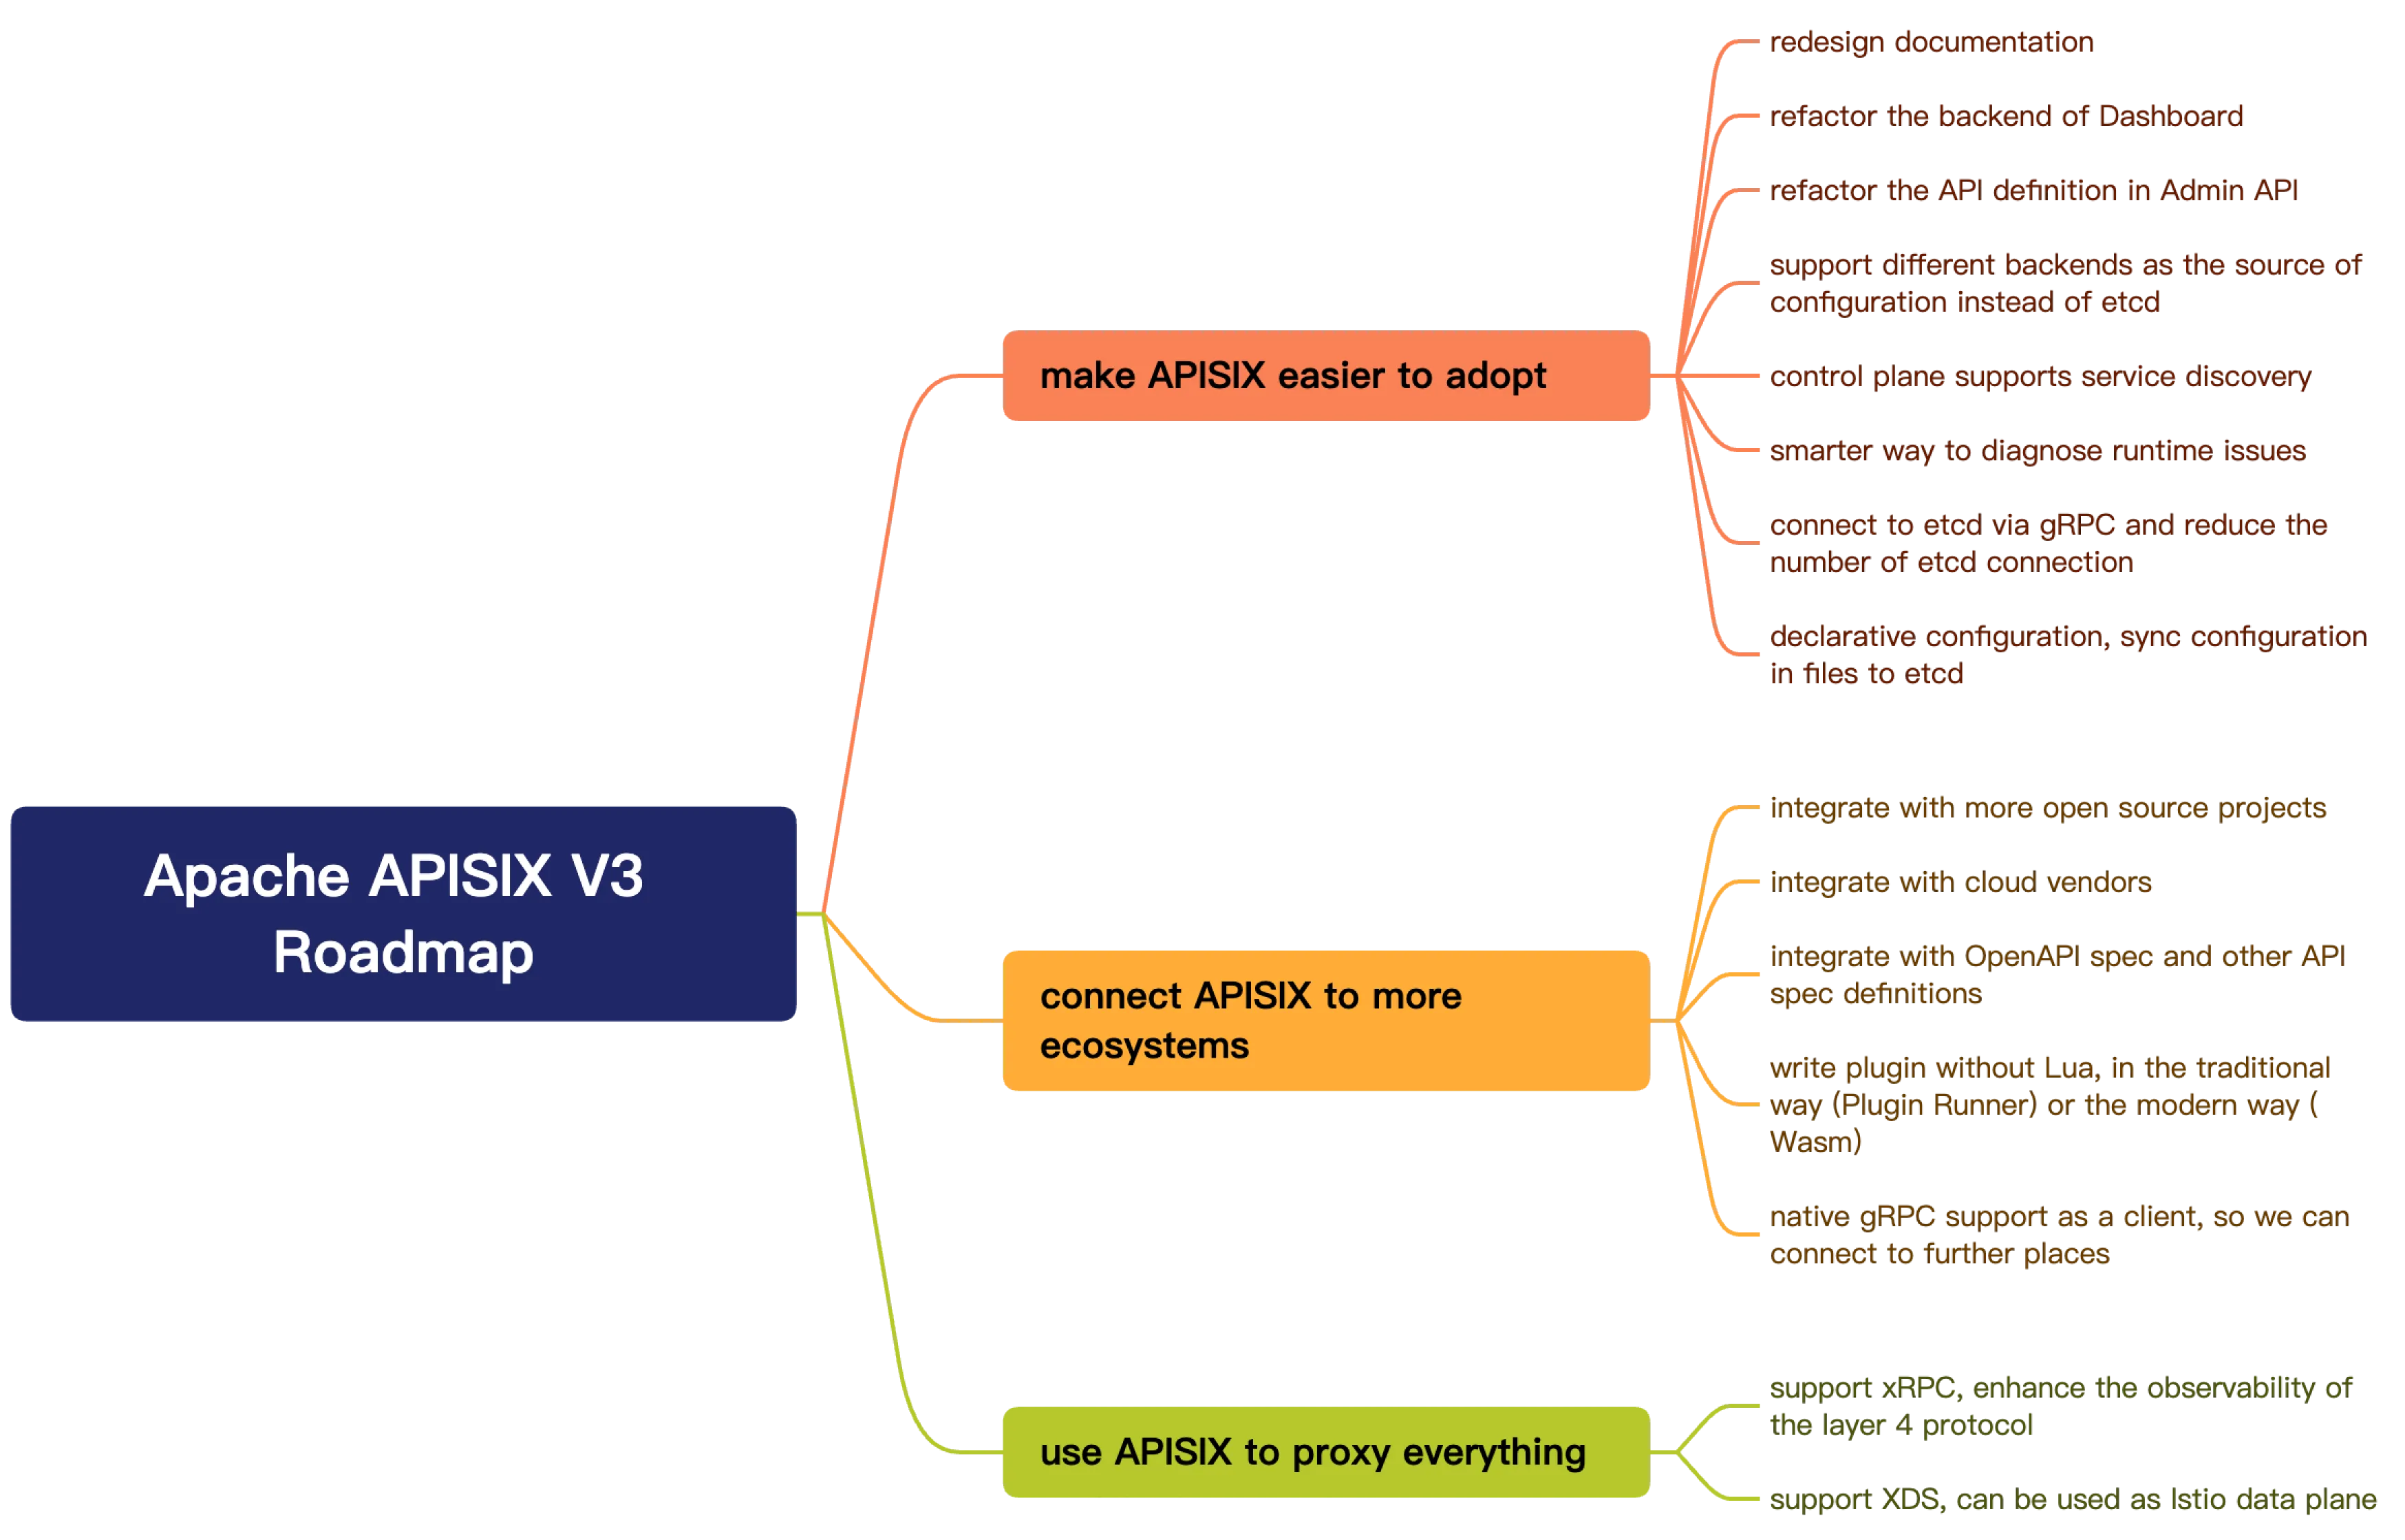 Apache APISIX 3.0 Roadmap